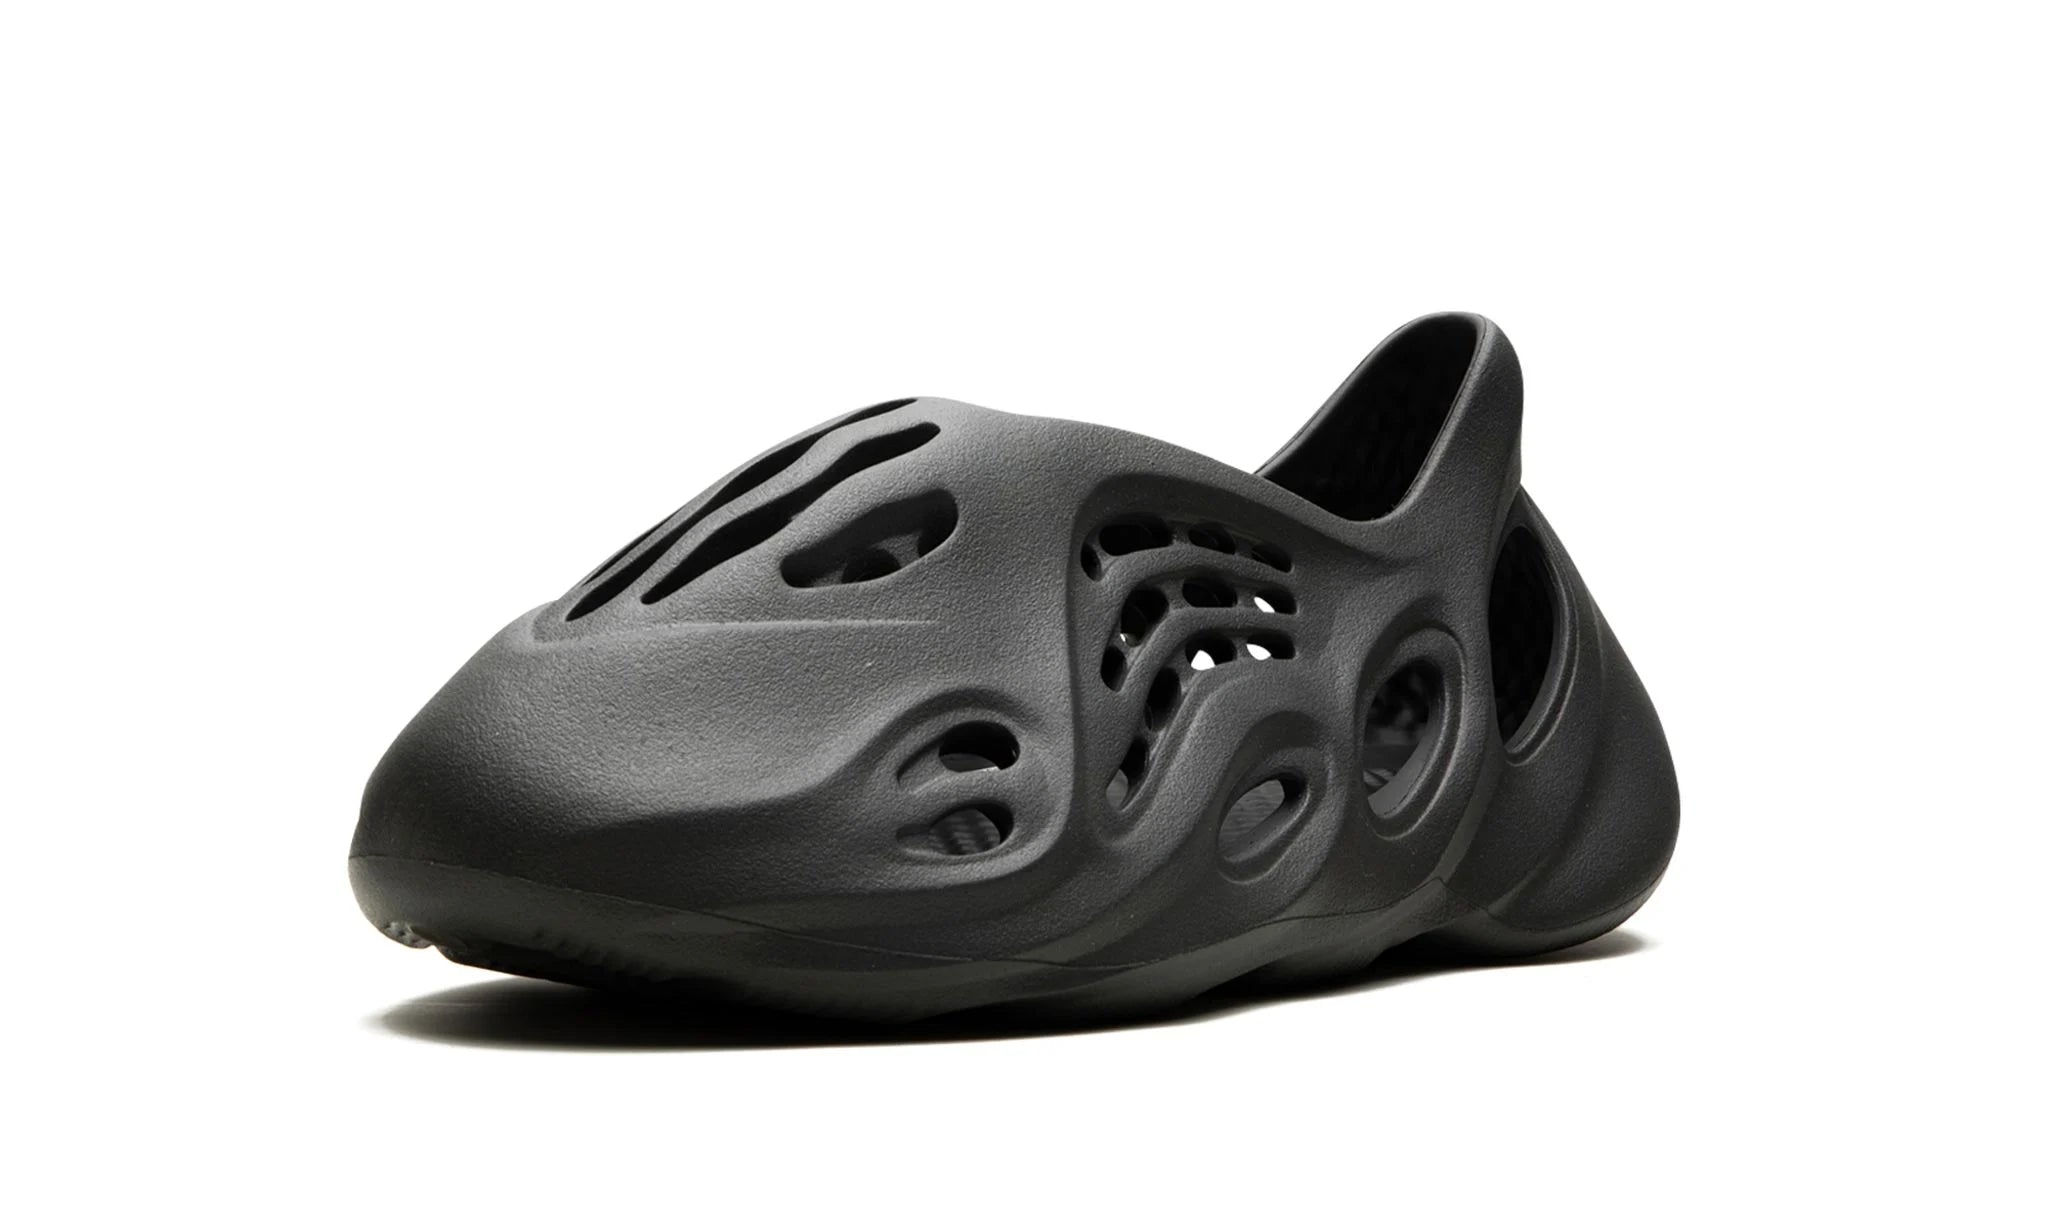 Adidas Yeezy Foam Runner Carbon - Yeezy Foam Runner - Pirri